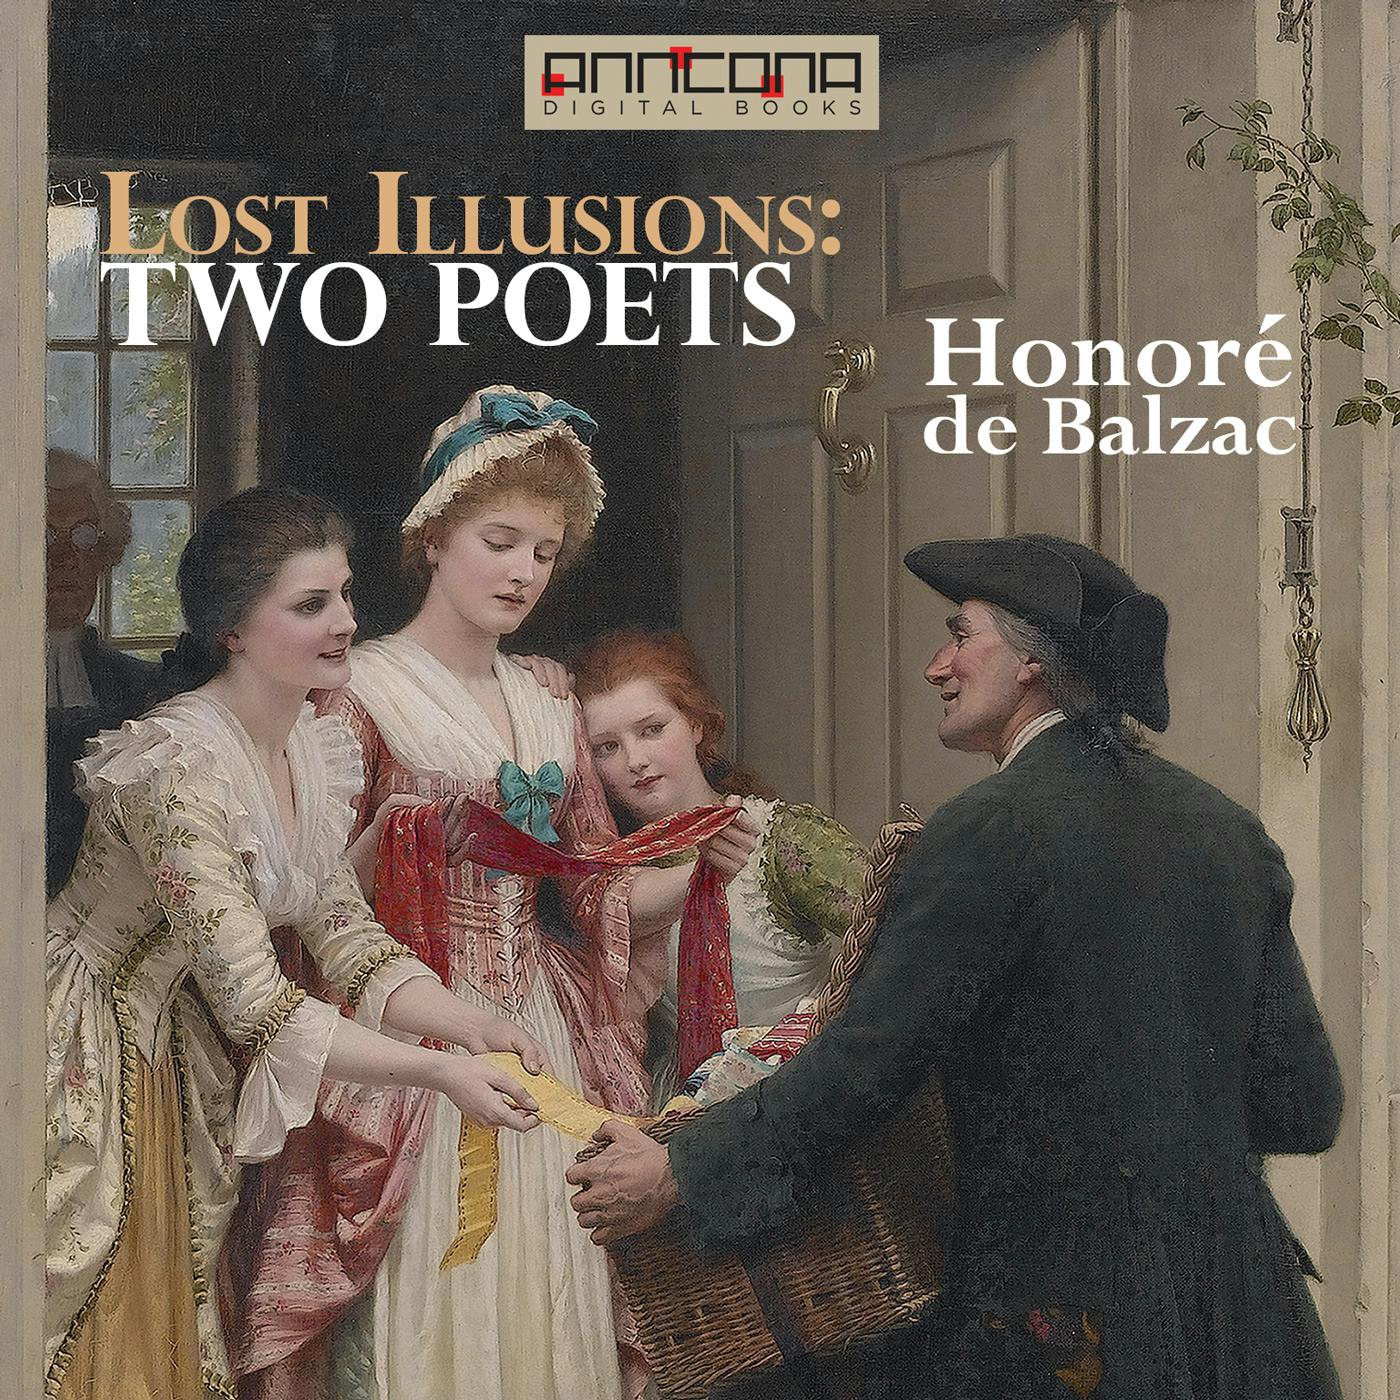 Two Poets - Honore de Balzac